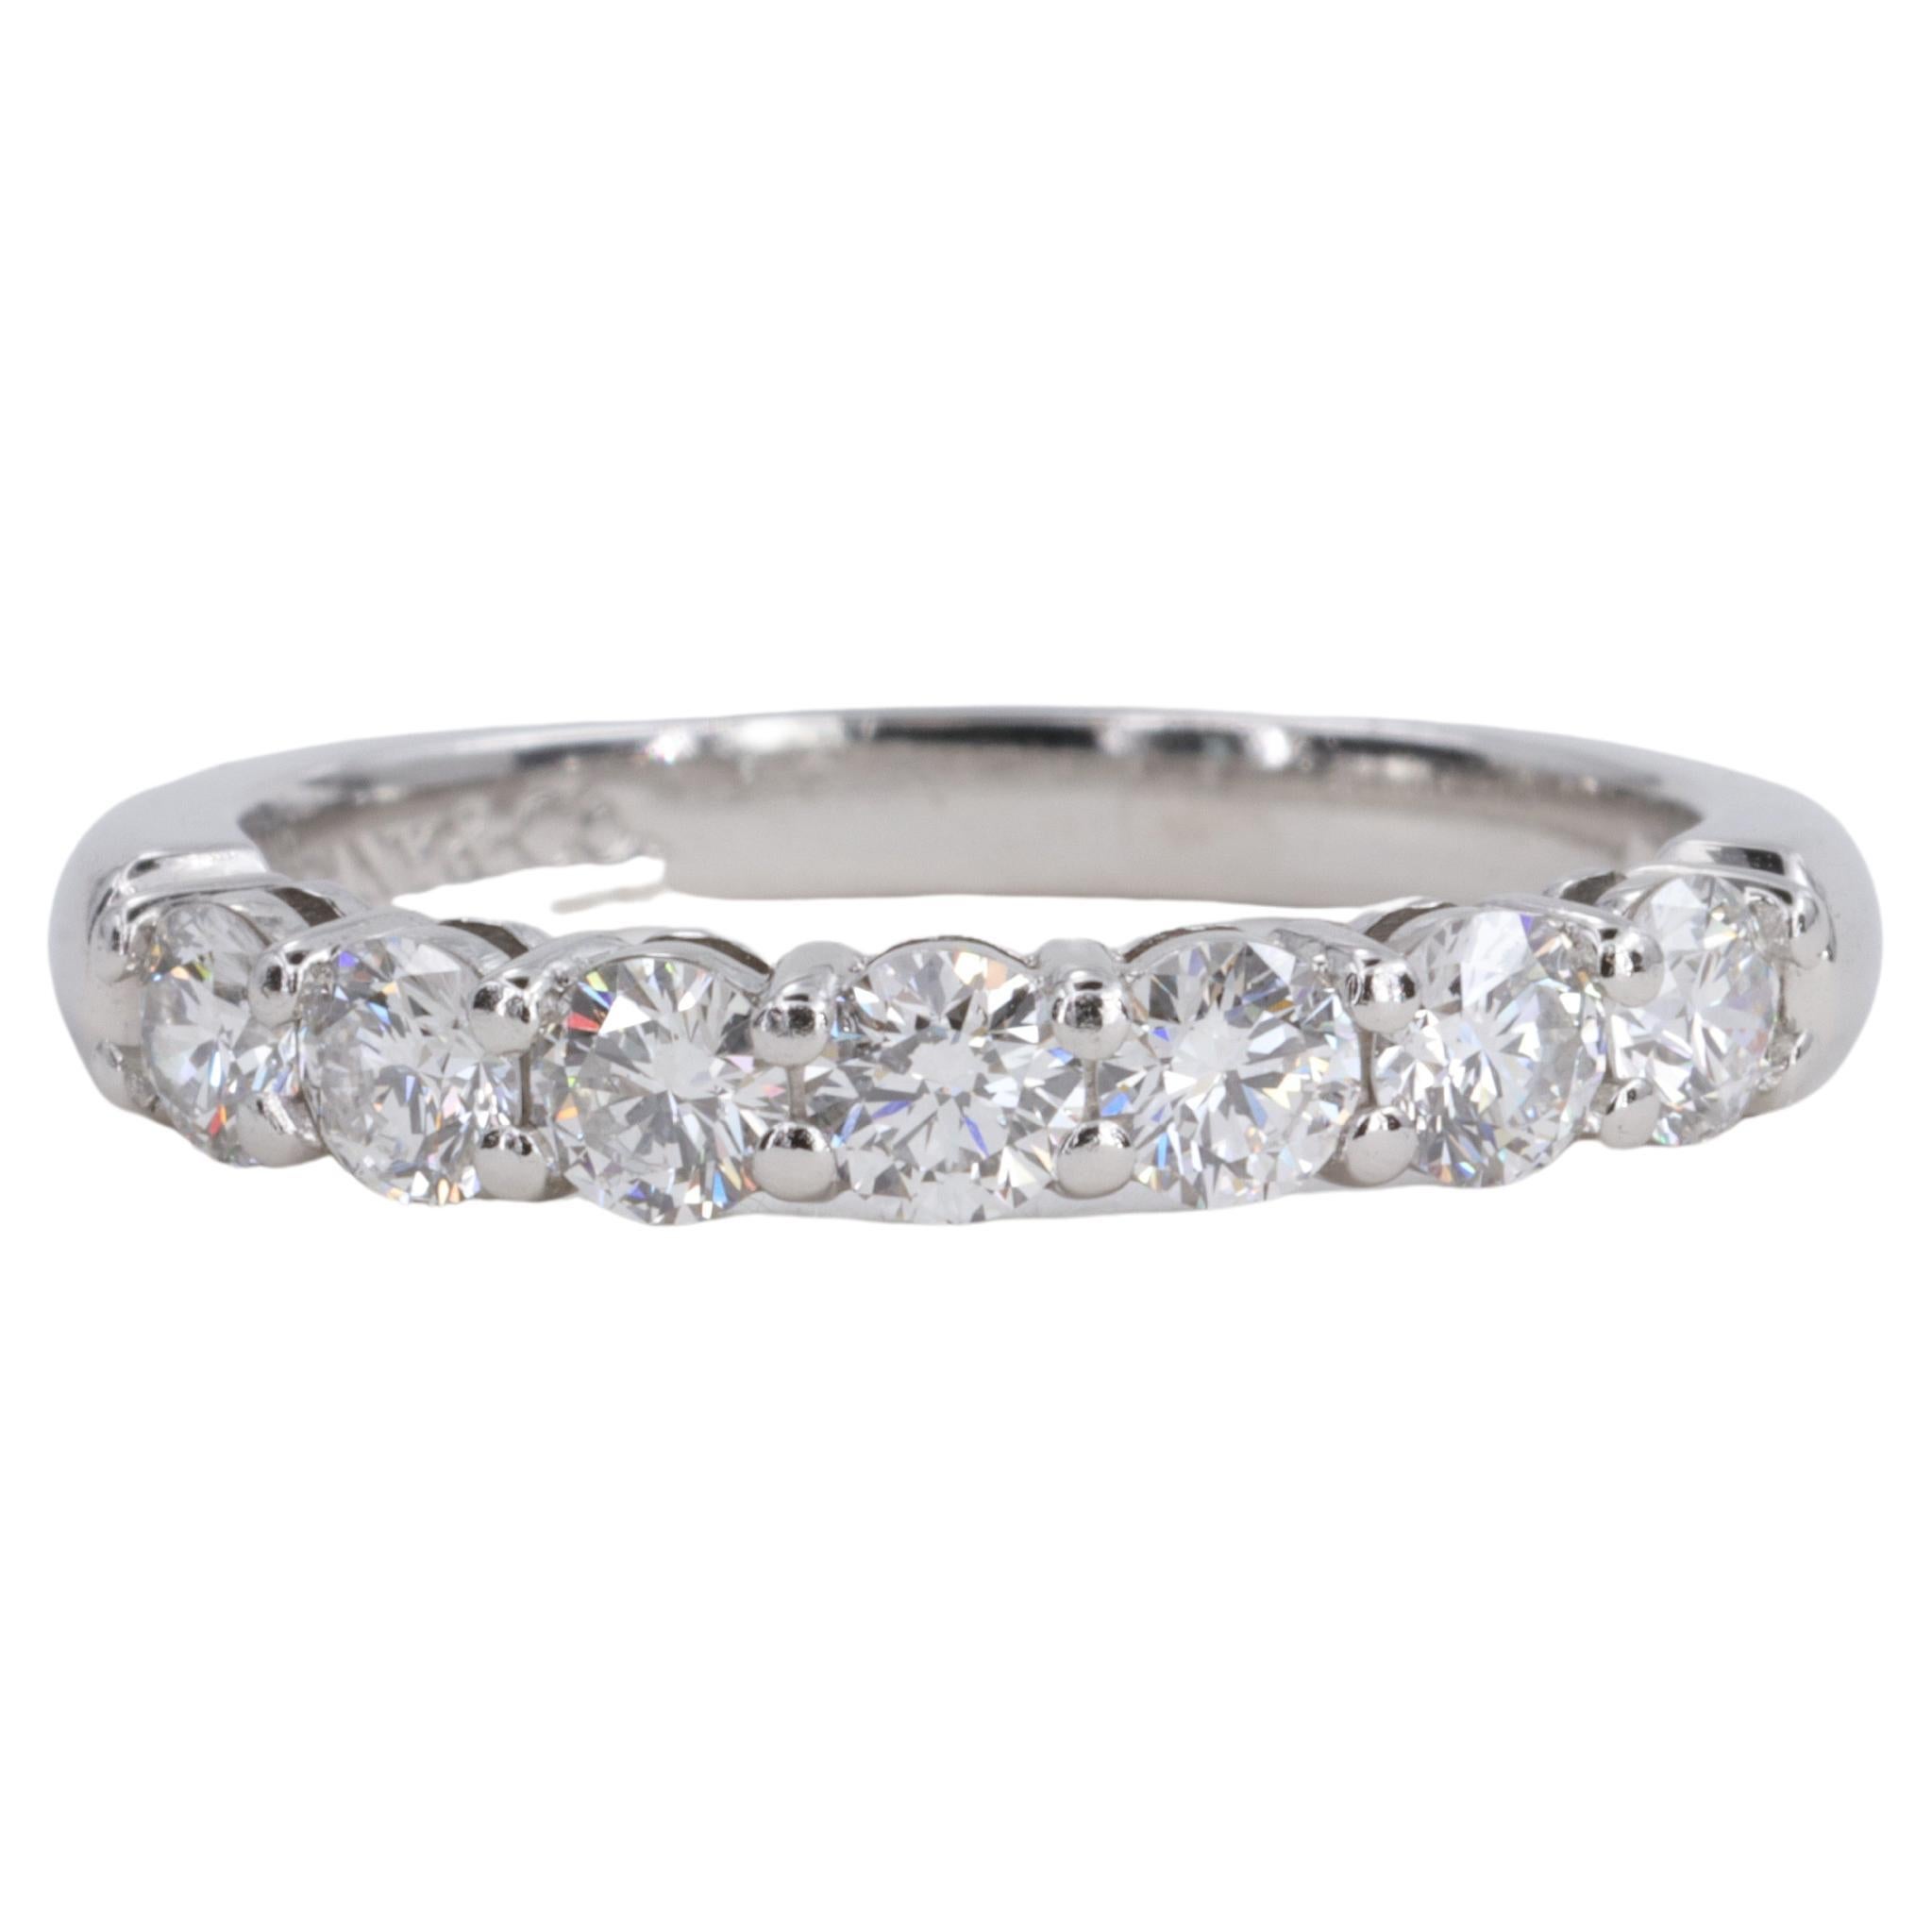 Tiffany & Co. Embrace 7 Stone Diamant-Ehering zum Hochzeitstag